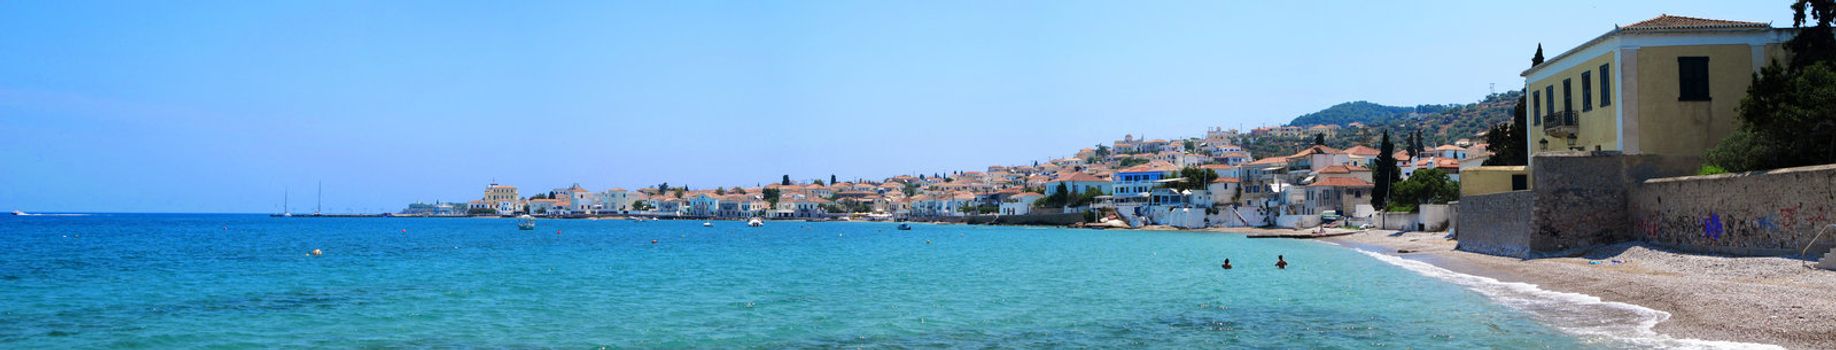 Panorama of Spetses a beautiful island in Greece